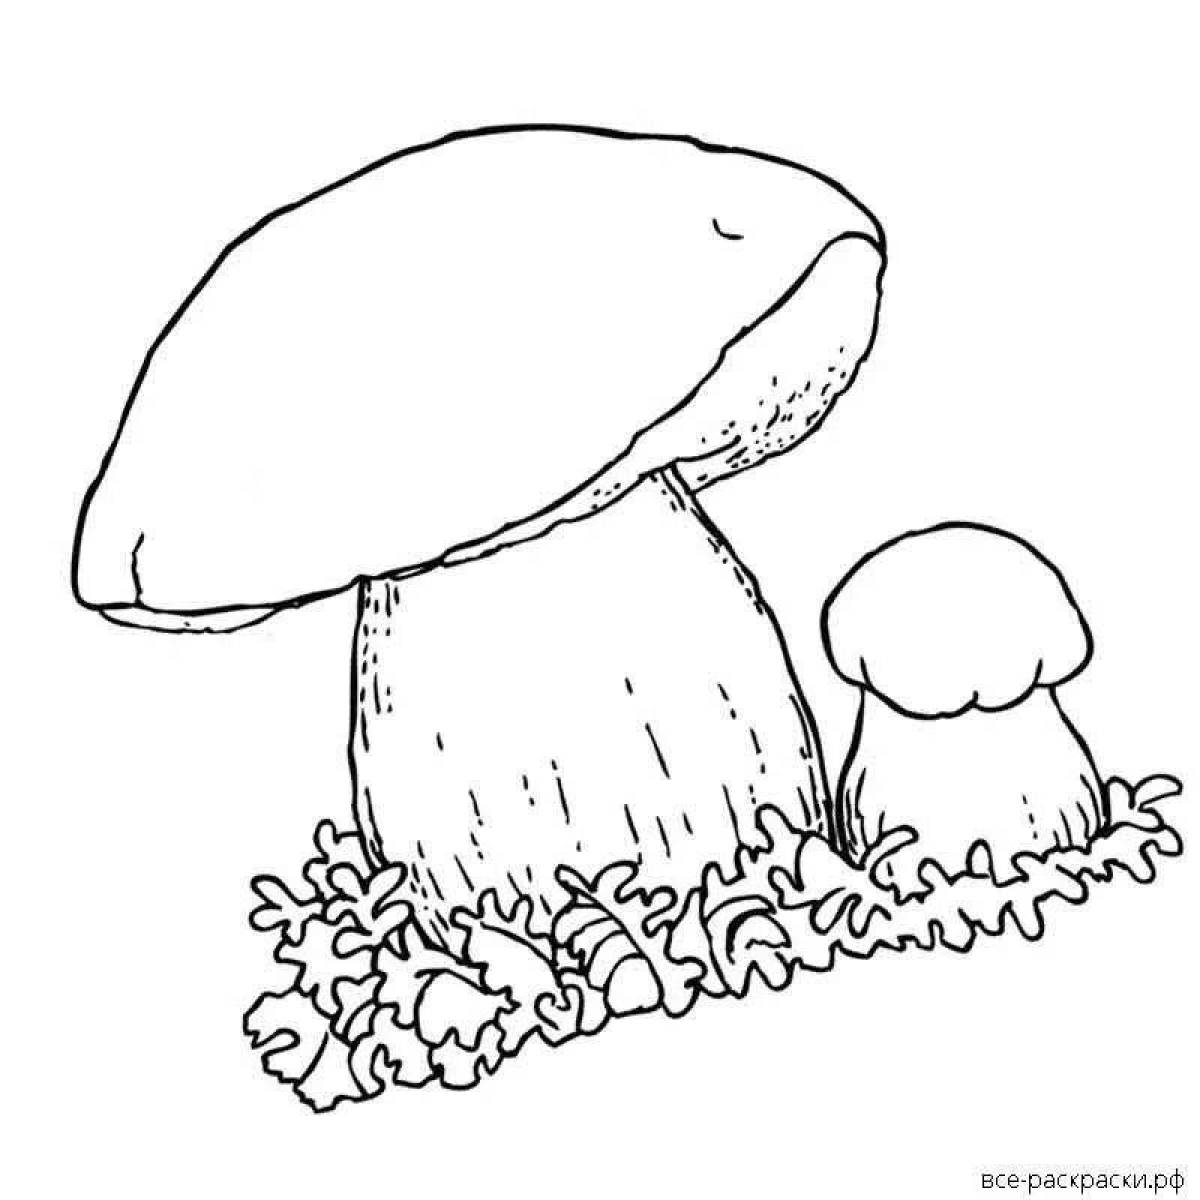 Adorable satanic mushroom coloring page